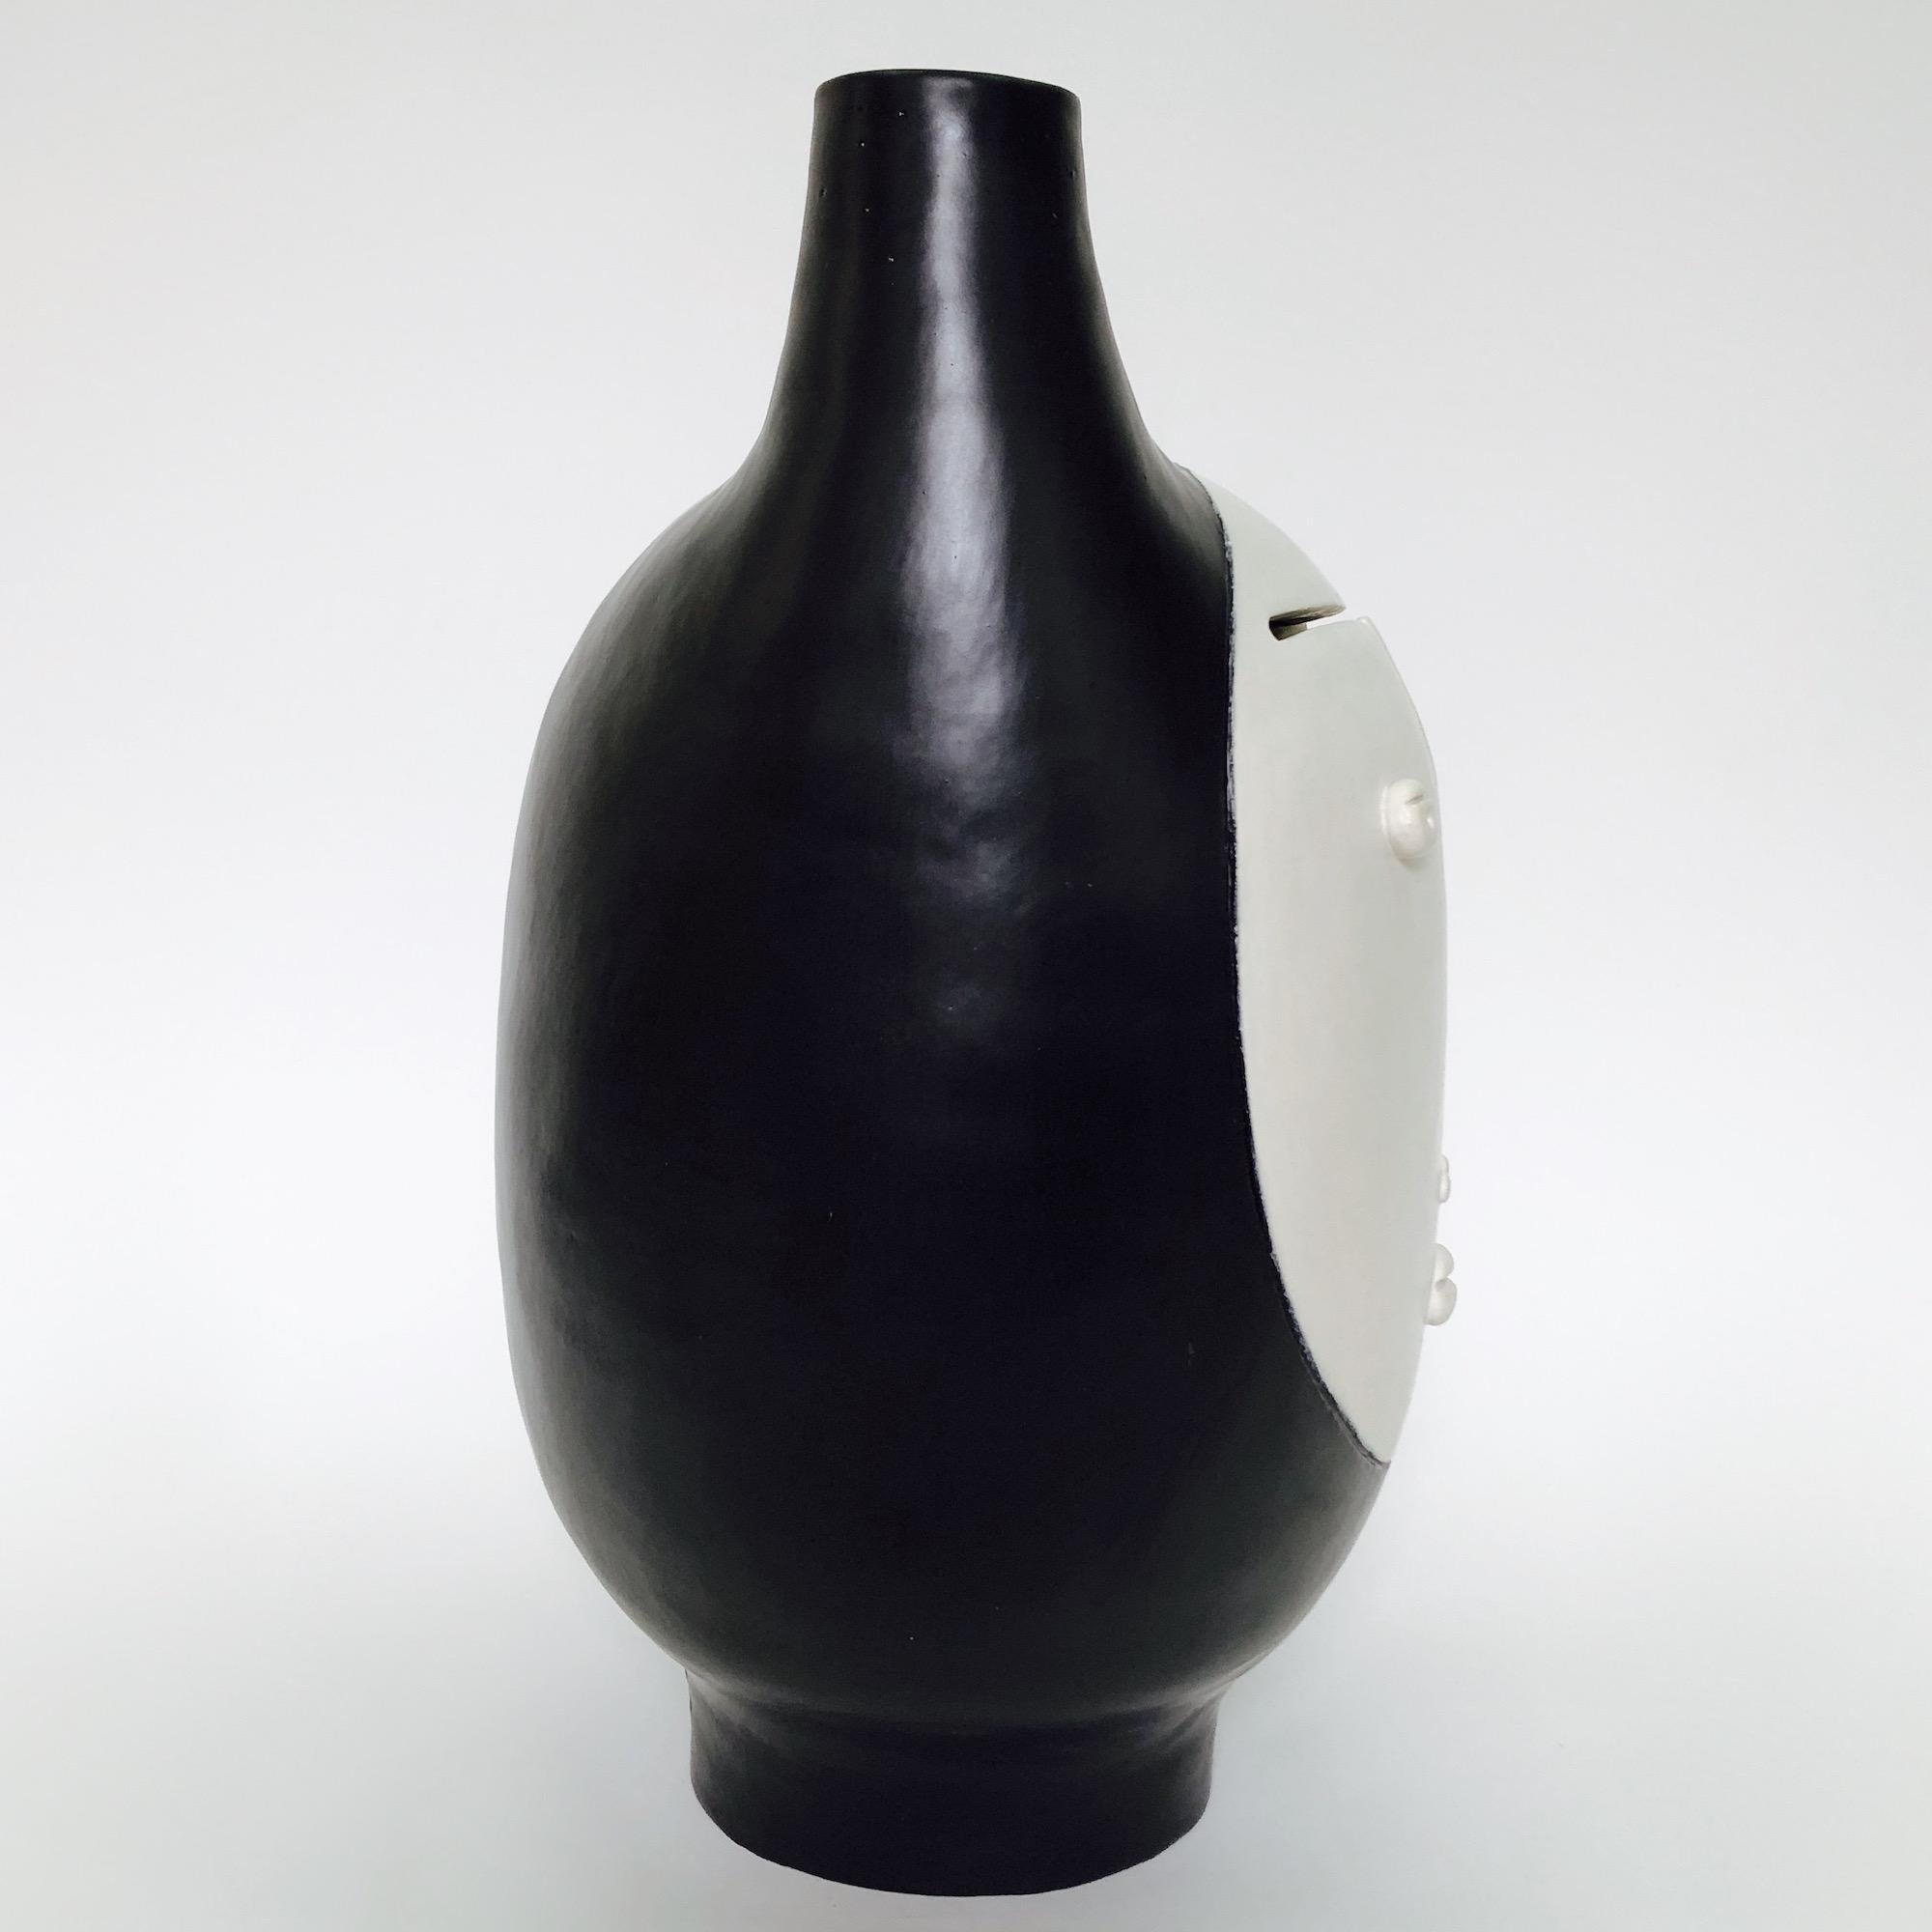 Organic Modern Dalo, Black and White Ceramic Table Lamp